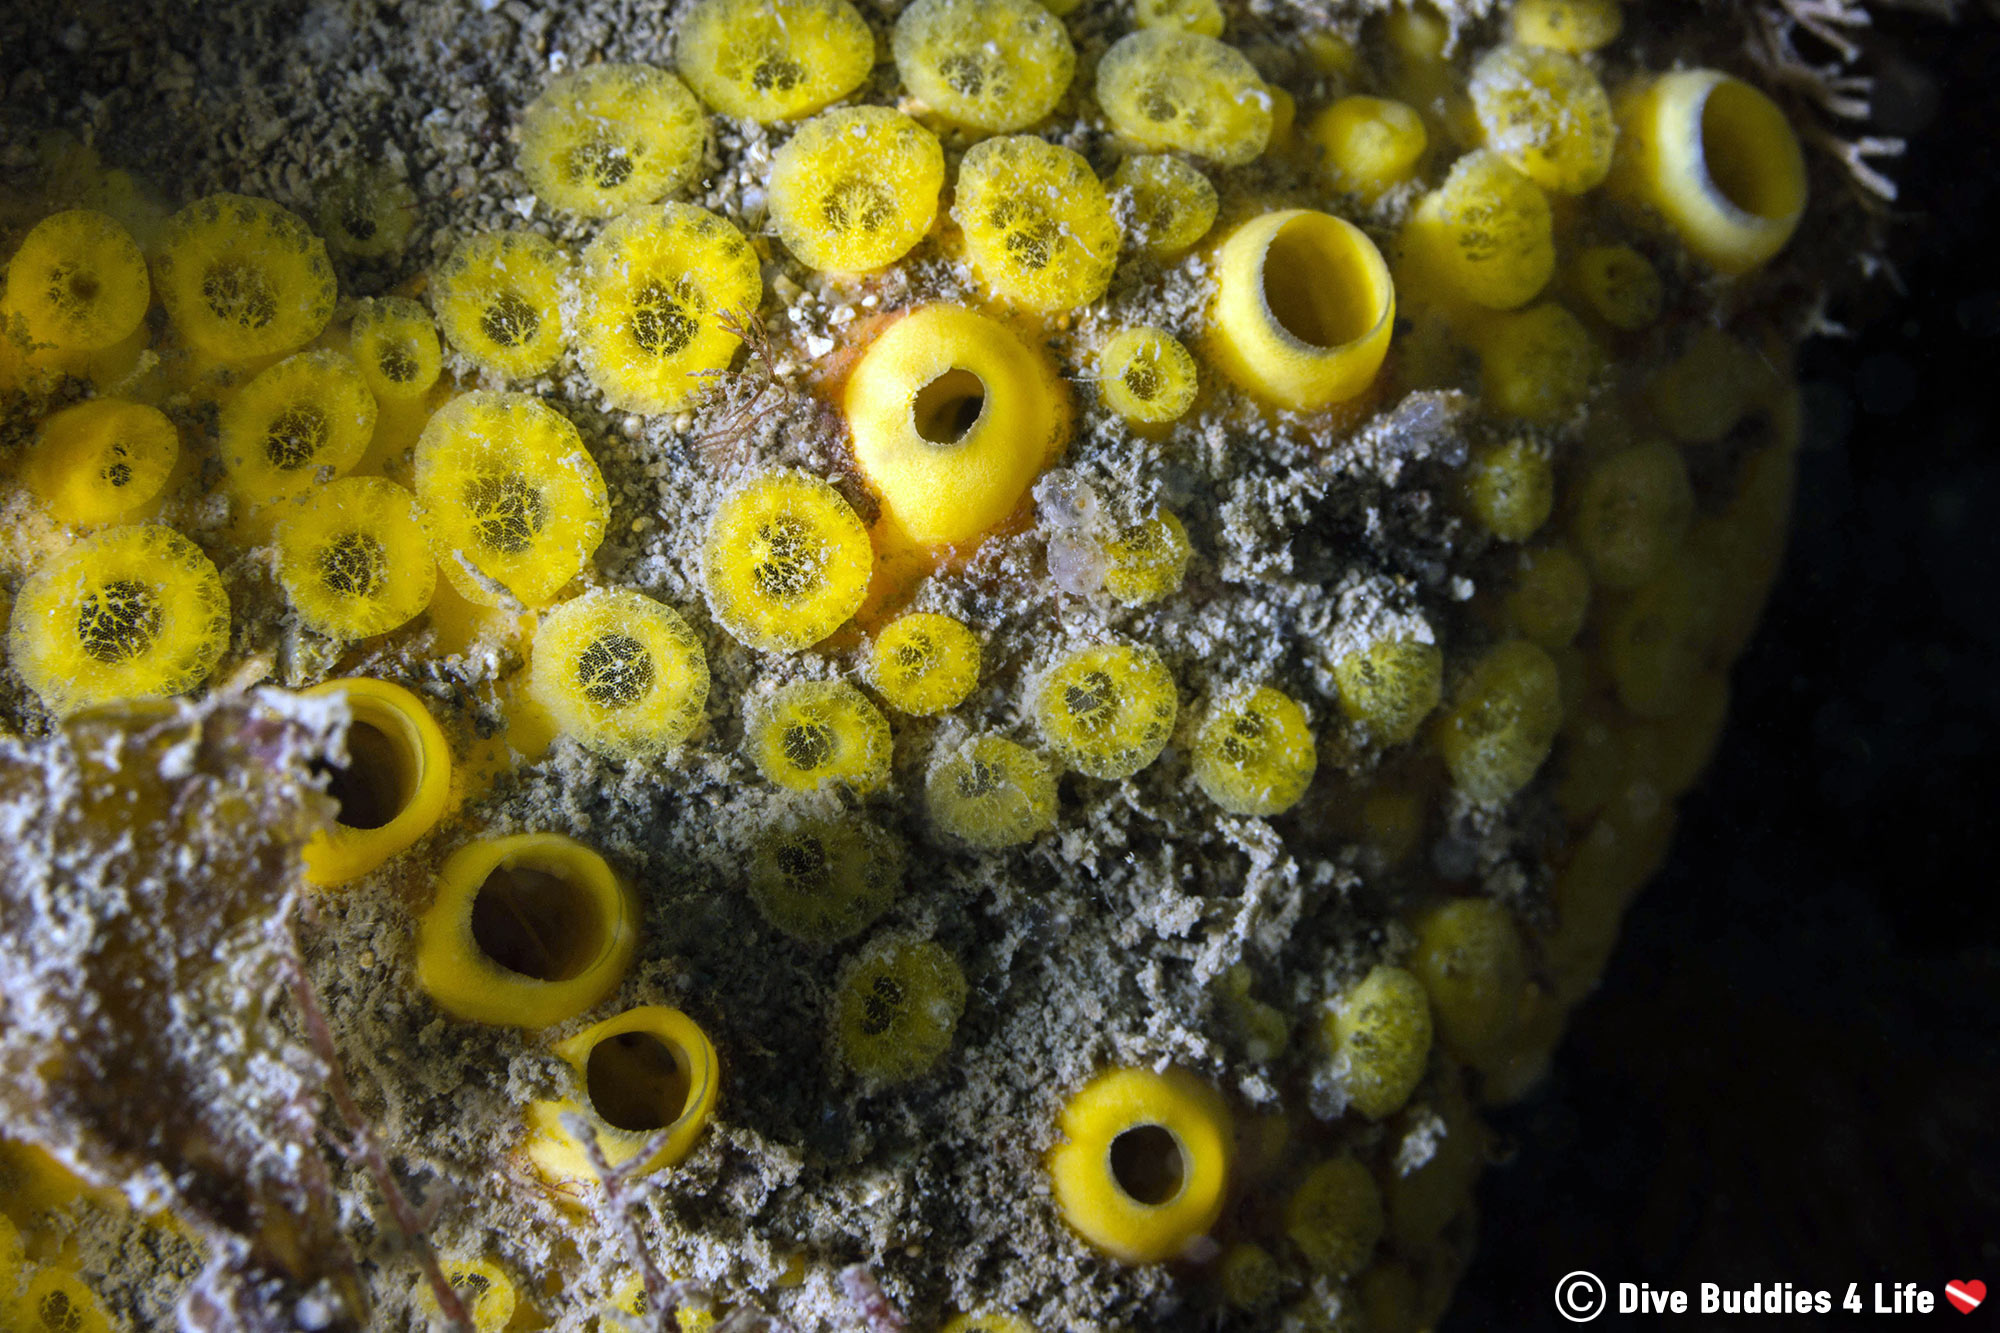 Small Invertebrate Sponge And Filter Feeding Like Boat Diving From Portland, England, UK